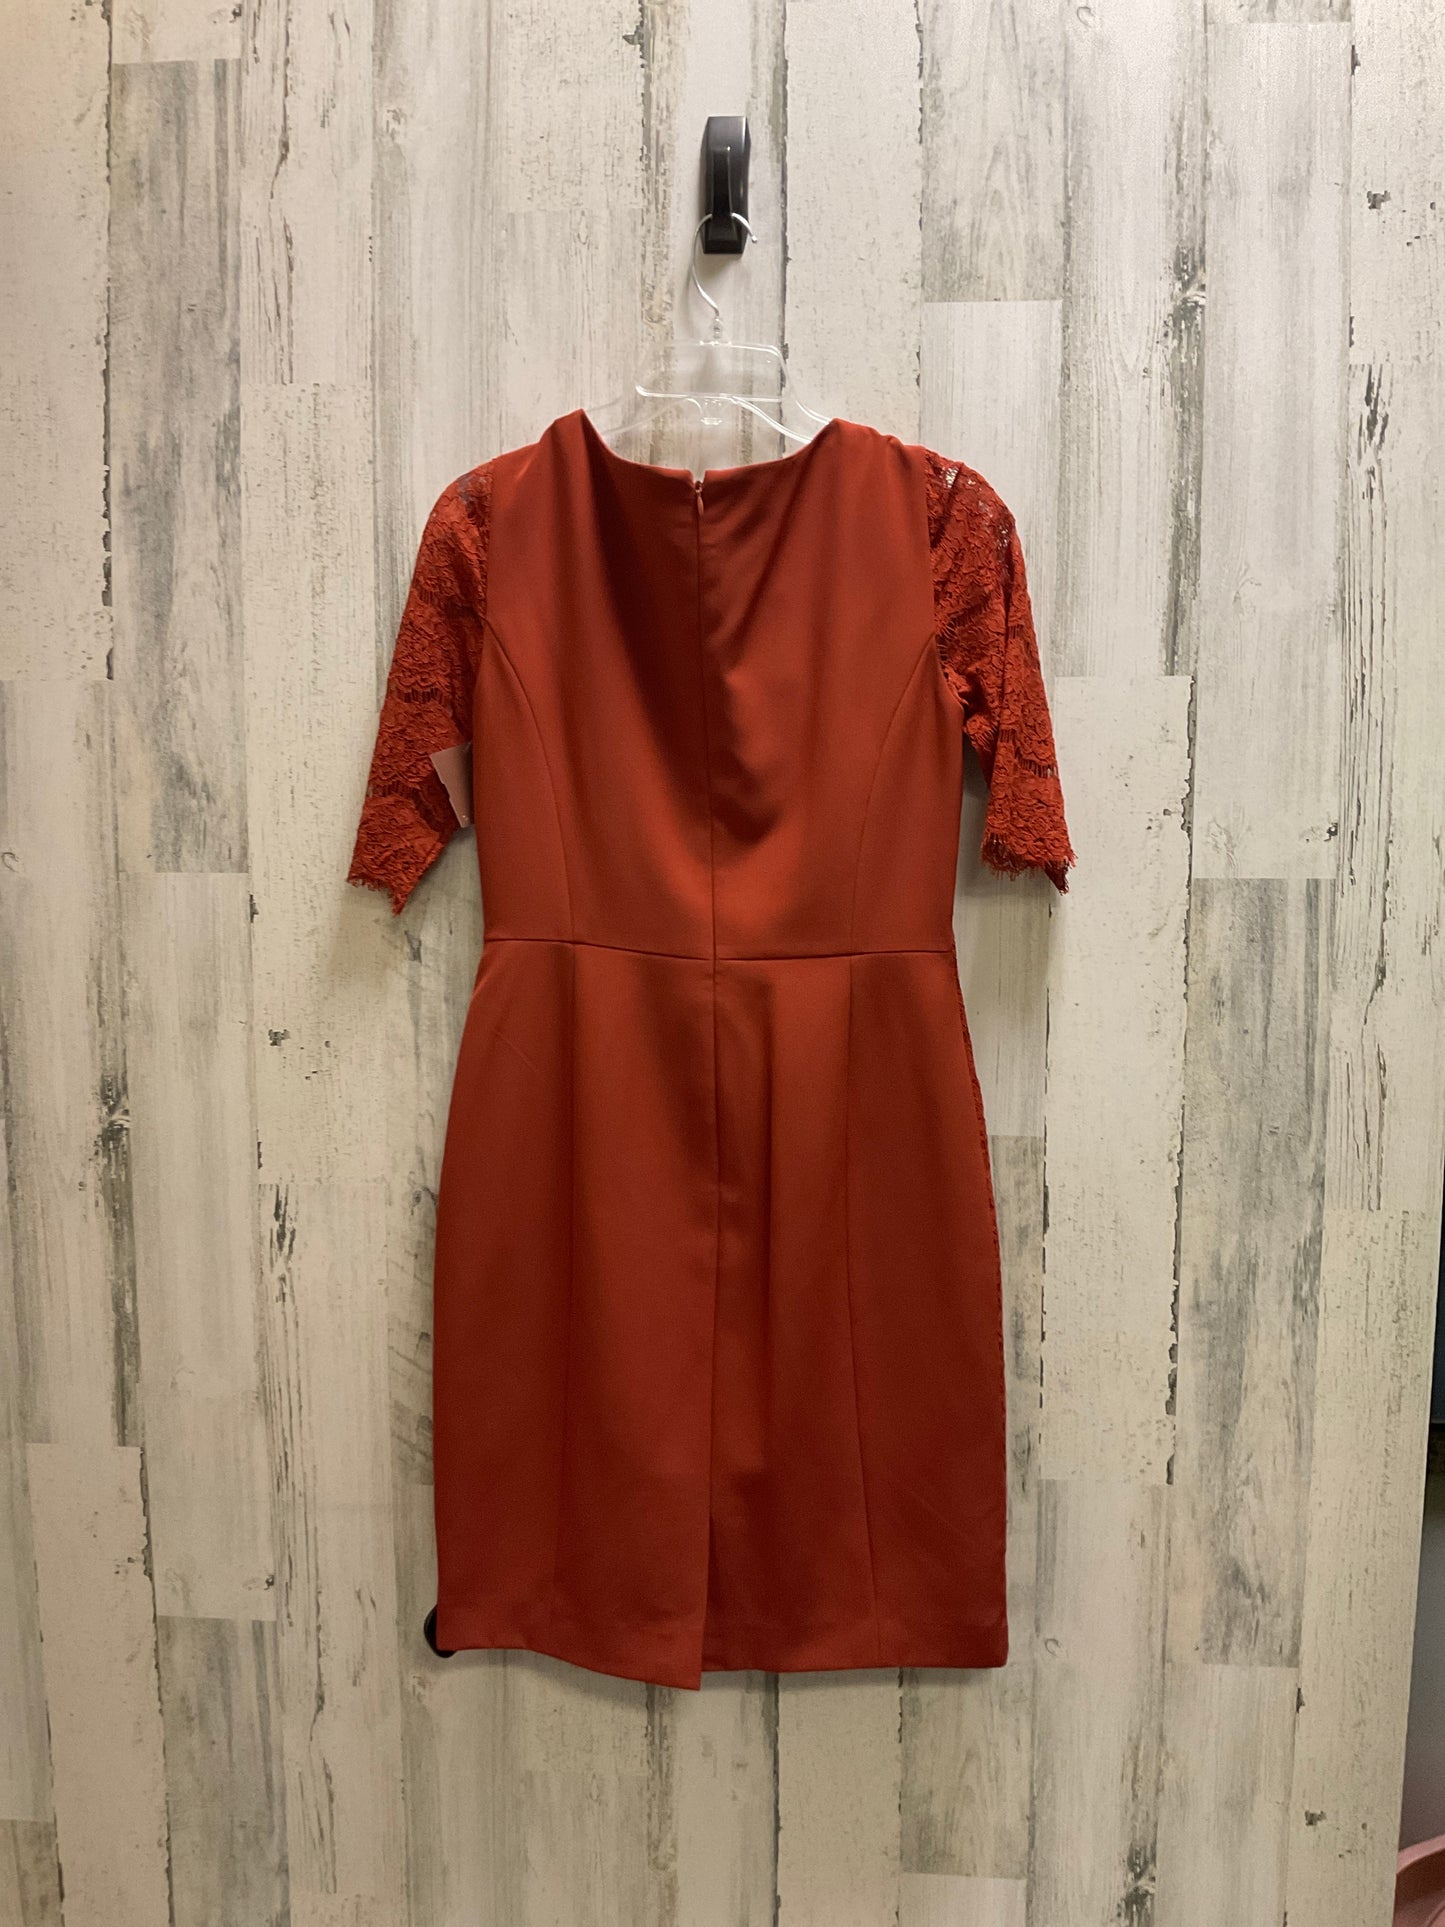 Dress Casual Short By Antonio Melani  Size: S